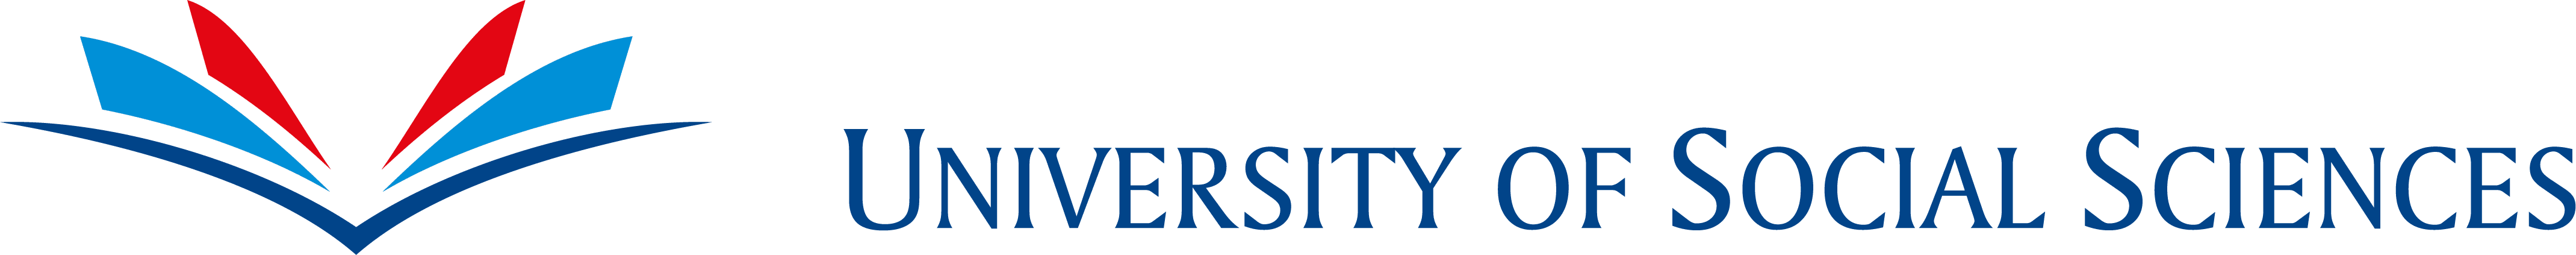 SAN Charity - University of Social Sciences - University of Social Sciences - University of SAN